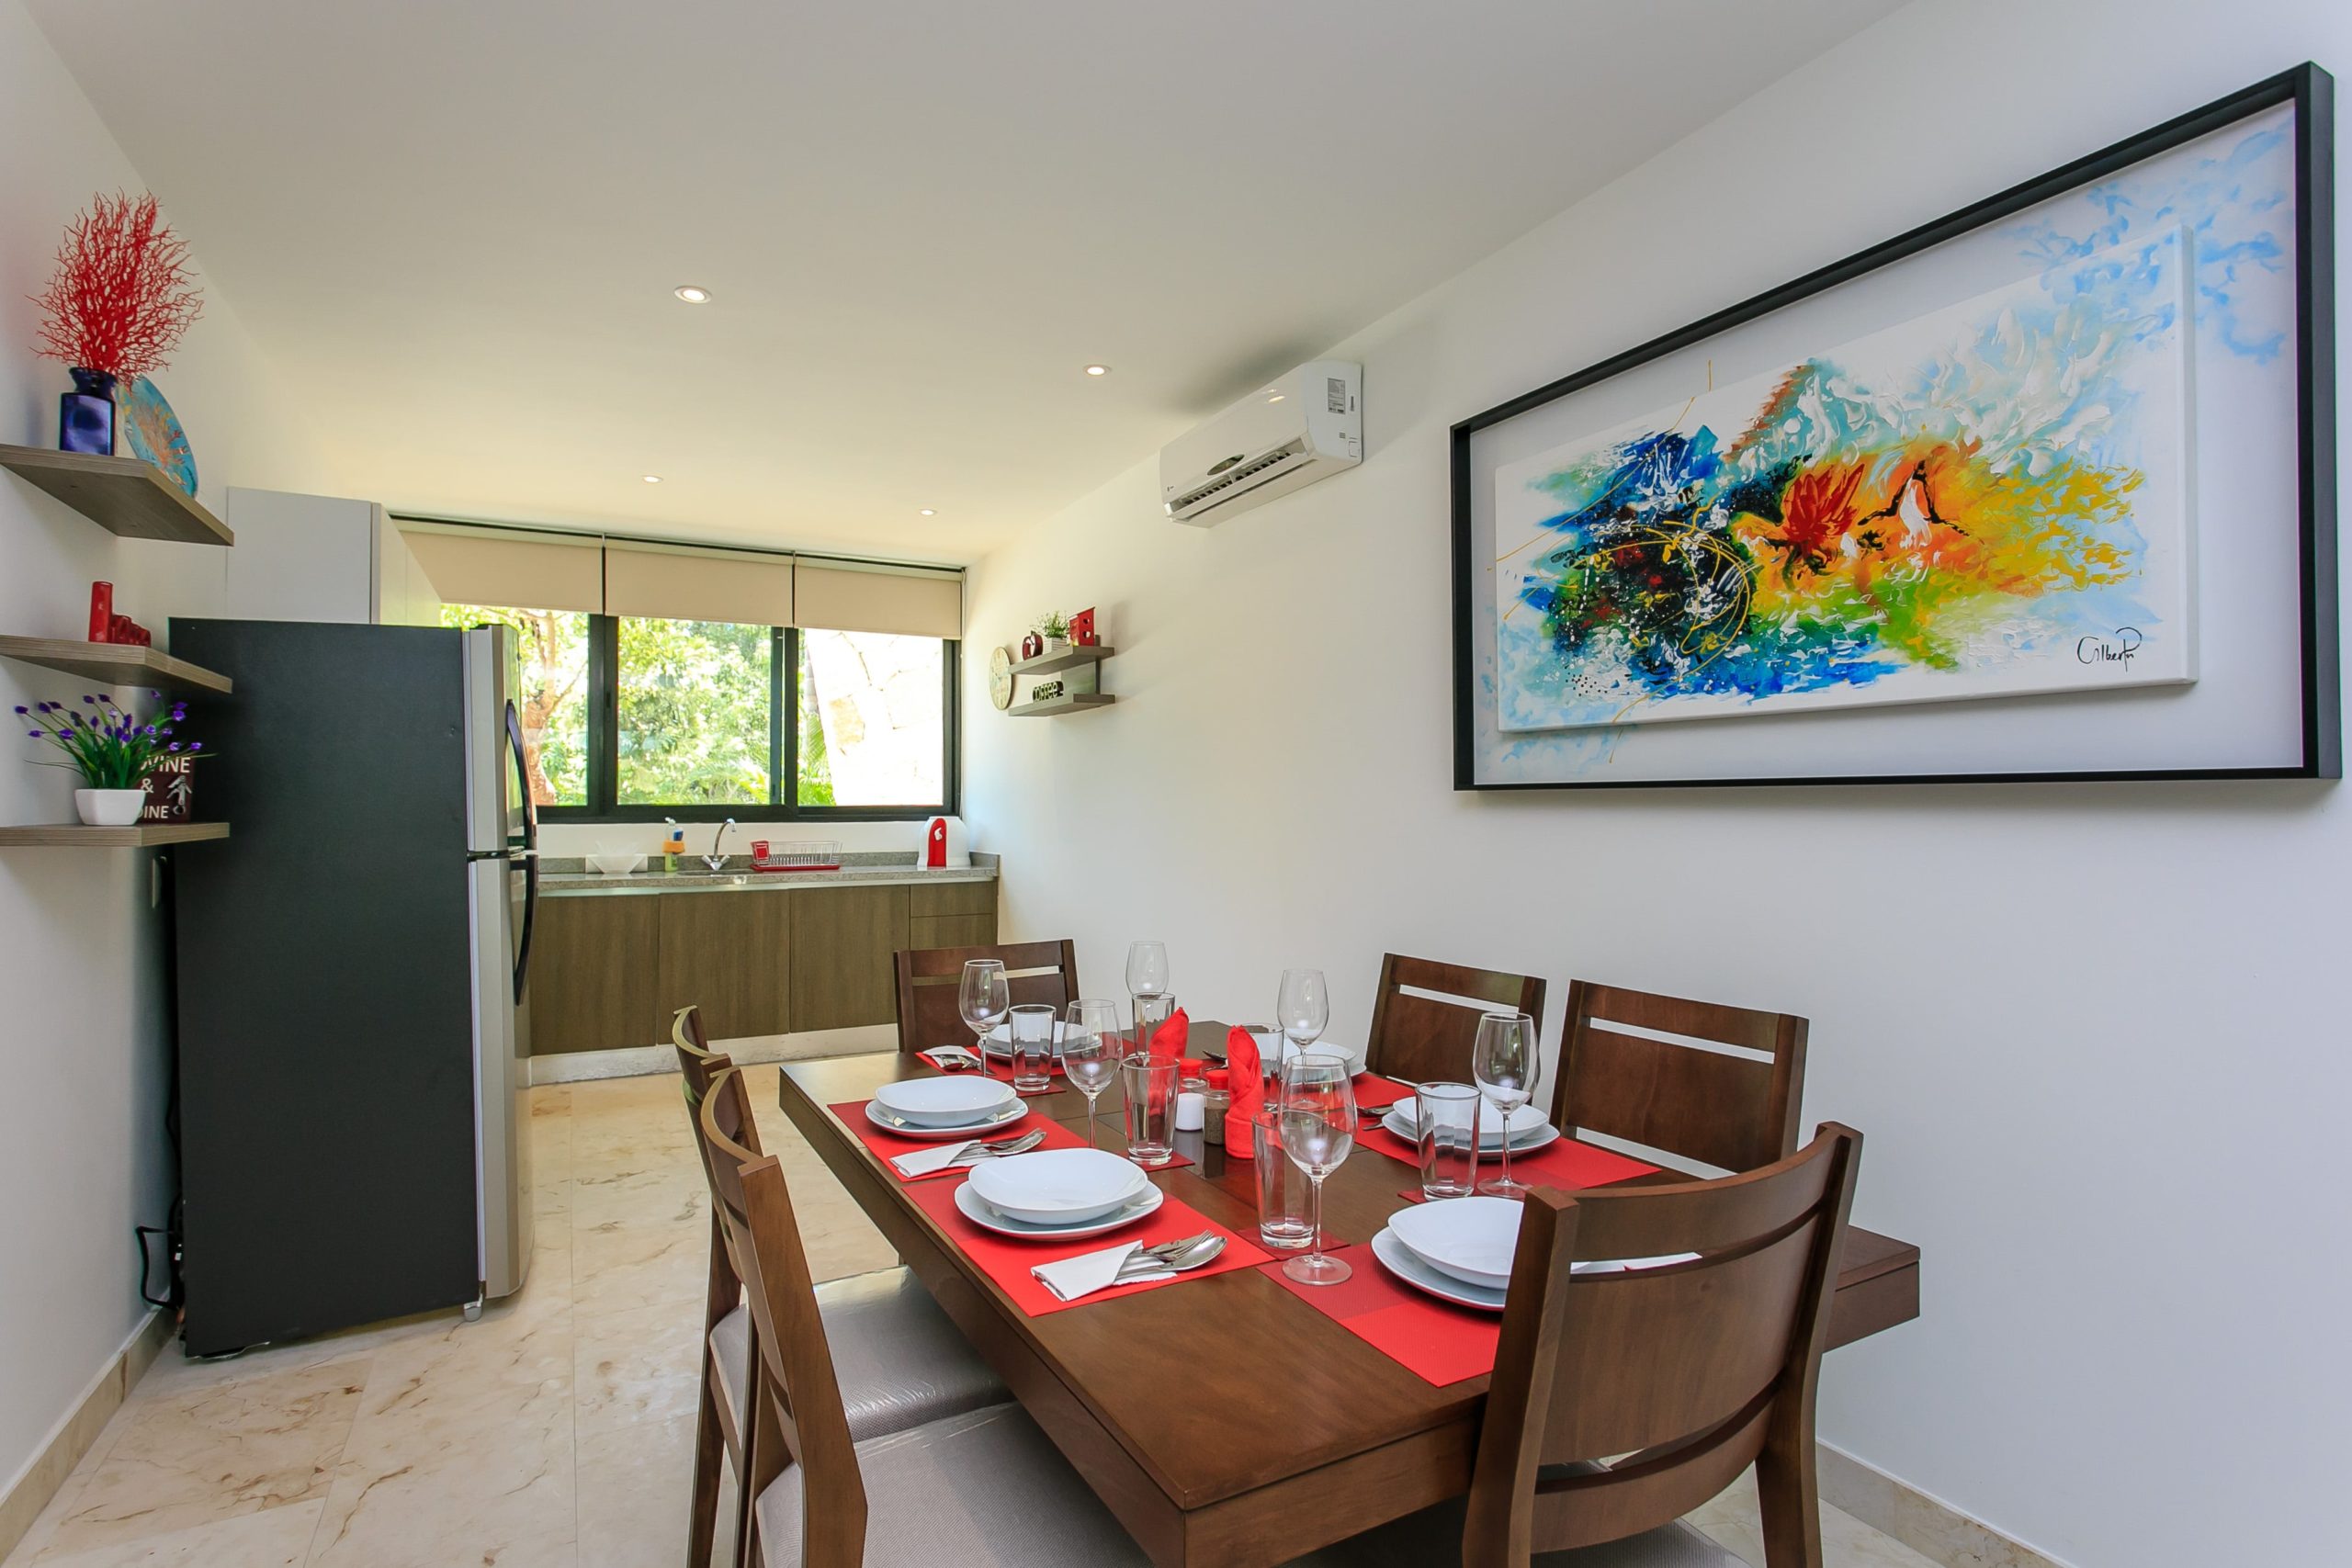 h apartments for sale in tulum encanto garden unit dining area